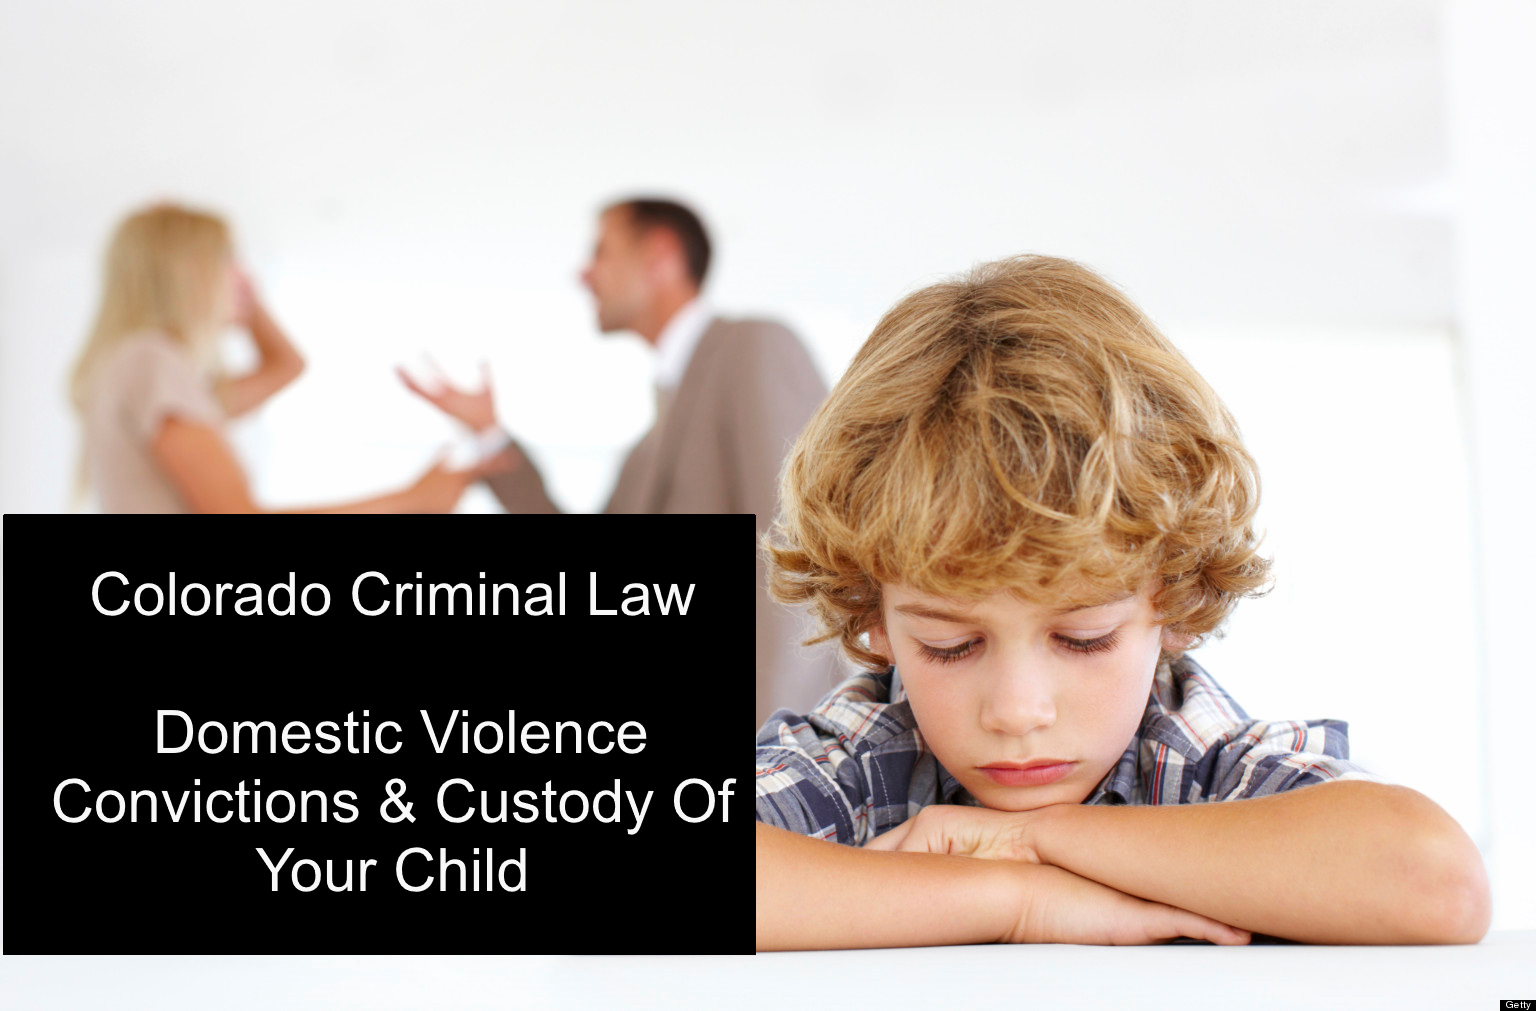 Colorado Criminal Law -Domestic Violence Convictions & Custody Of Your Child